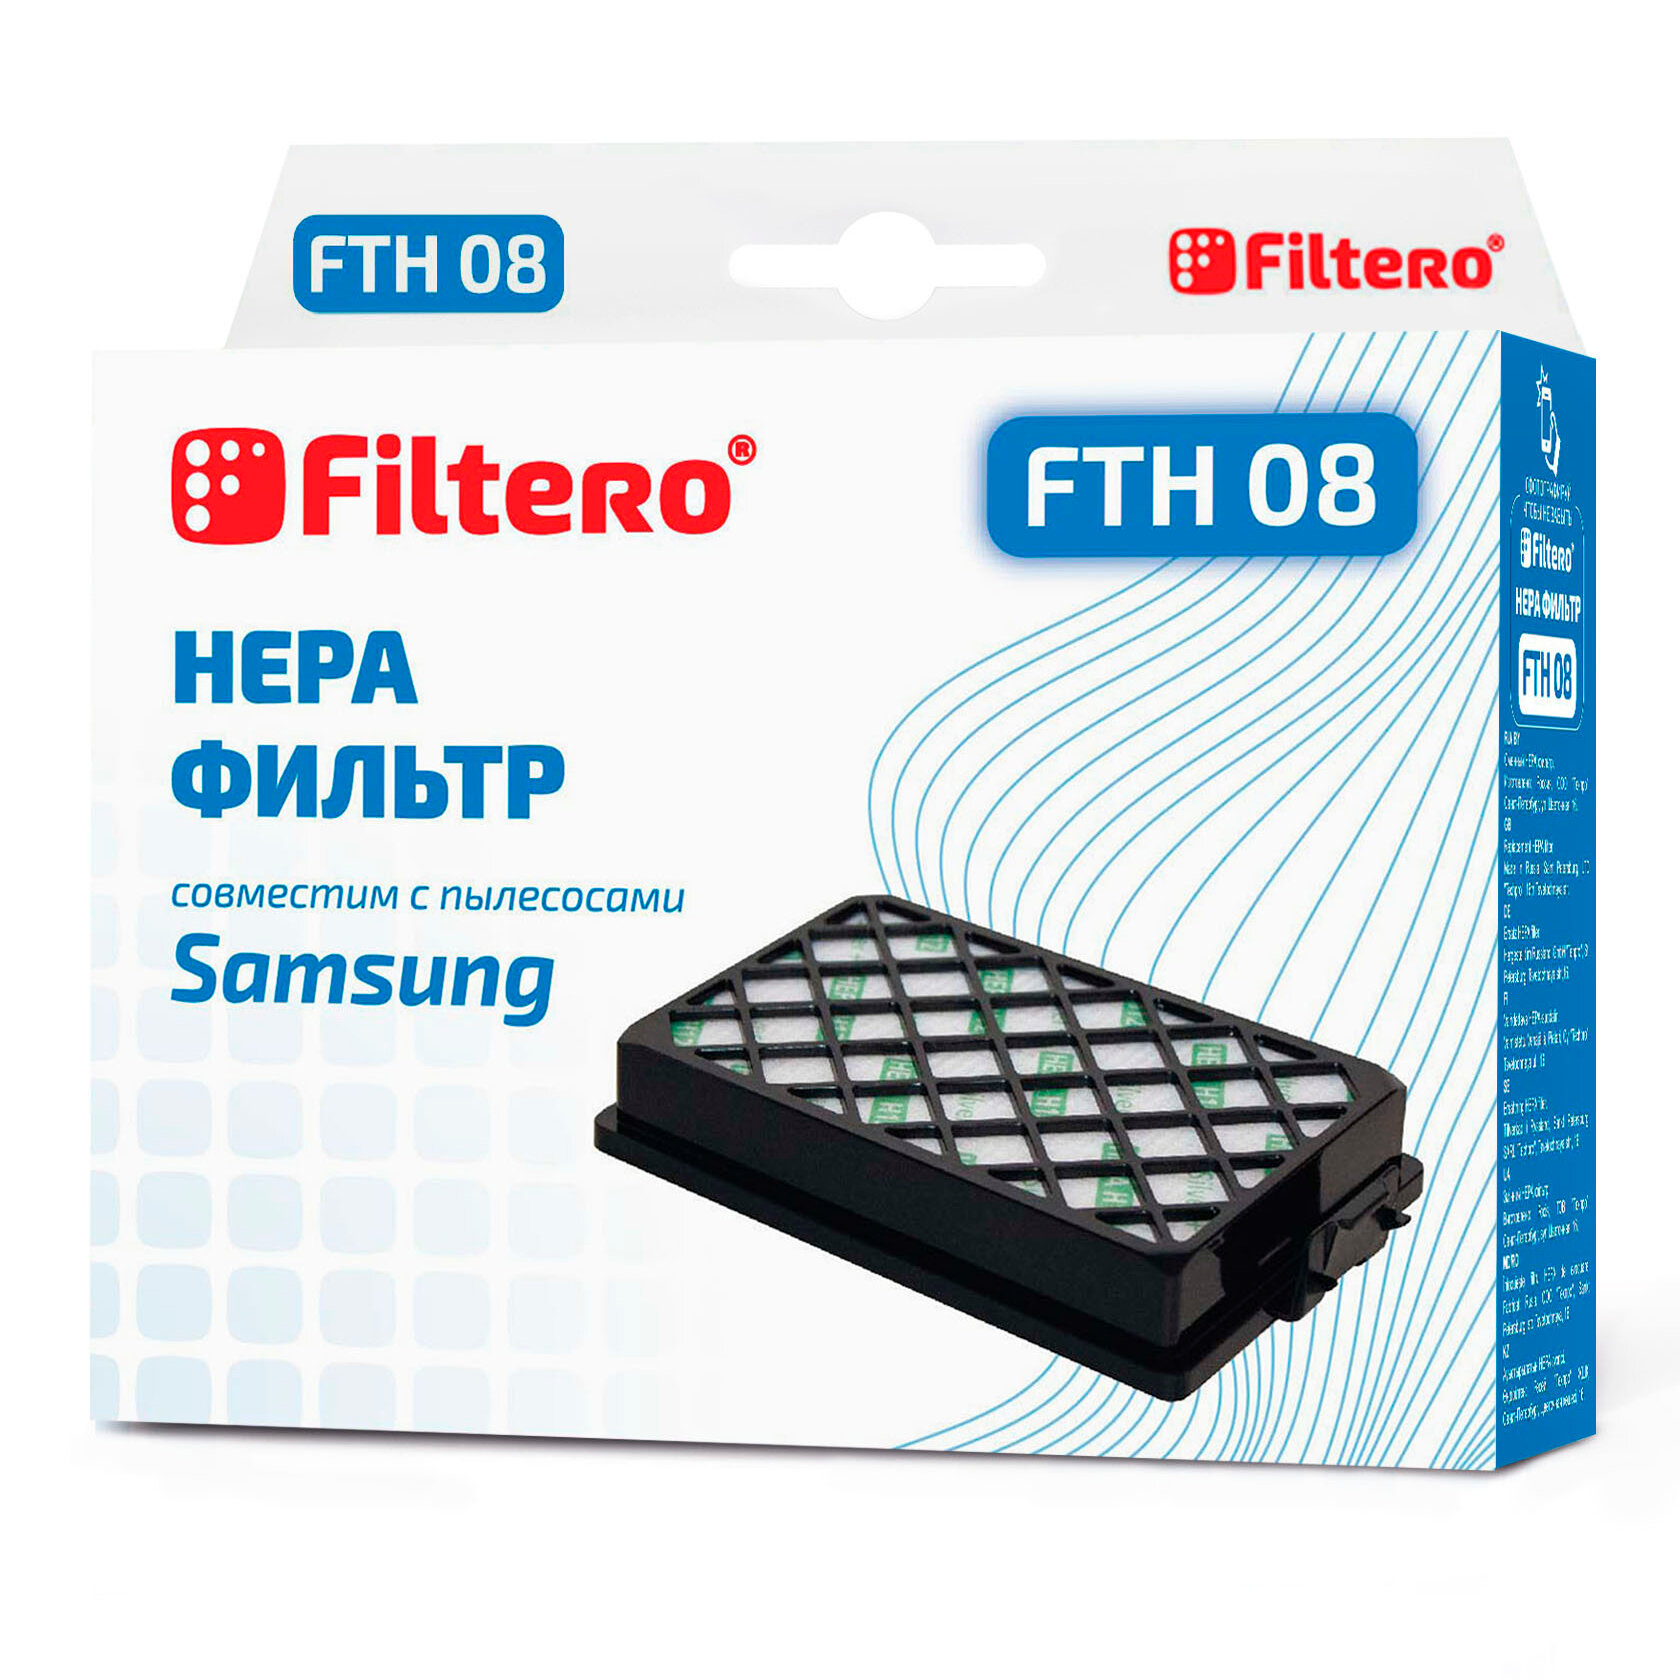 HEPA фильтр Filtero - фото №2